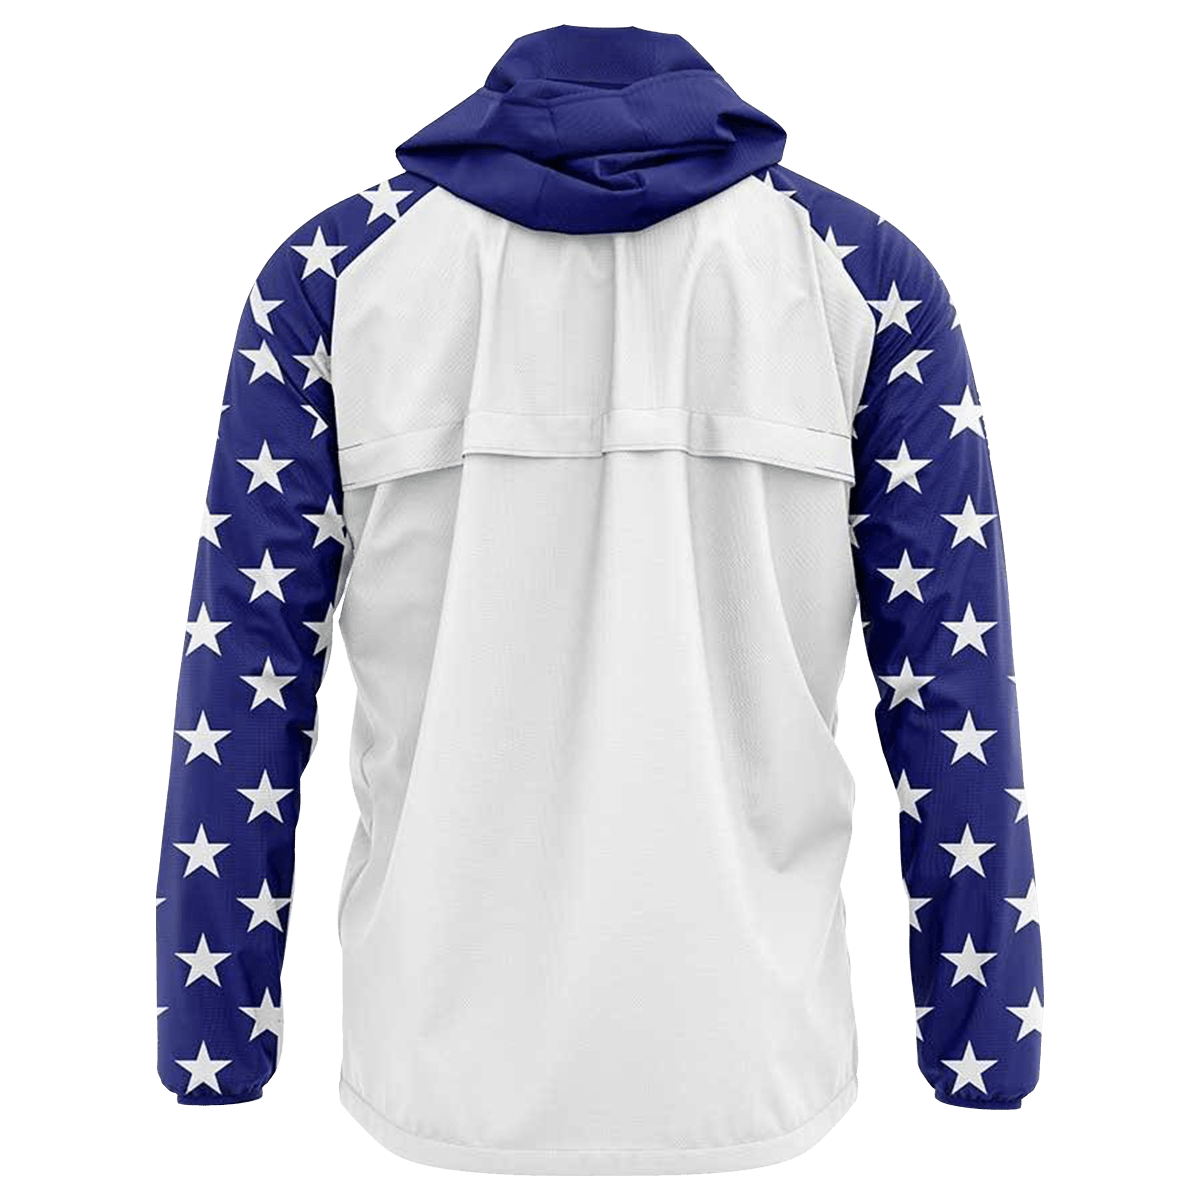 Thumbnail for USA Flag Jacket - Greater Half